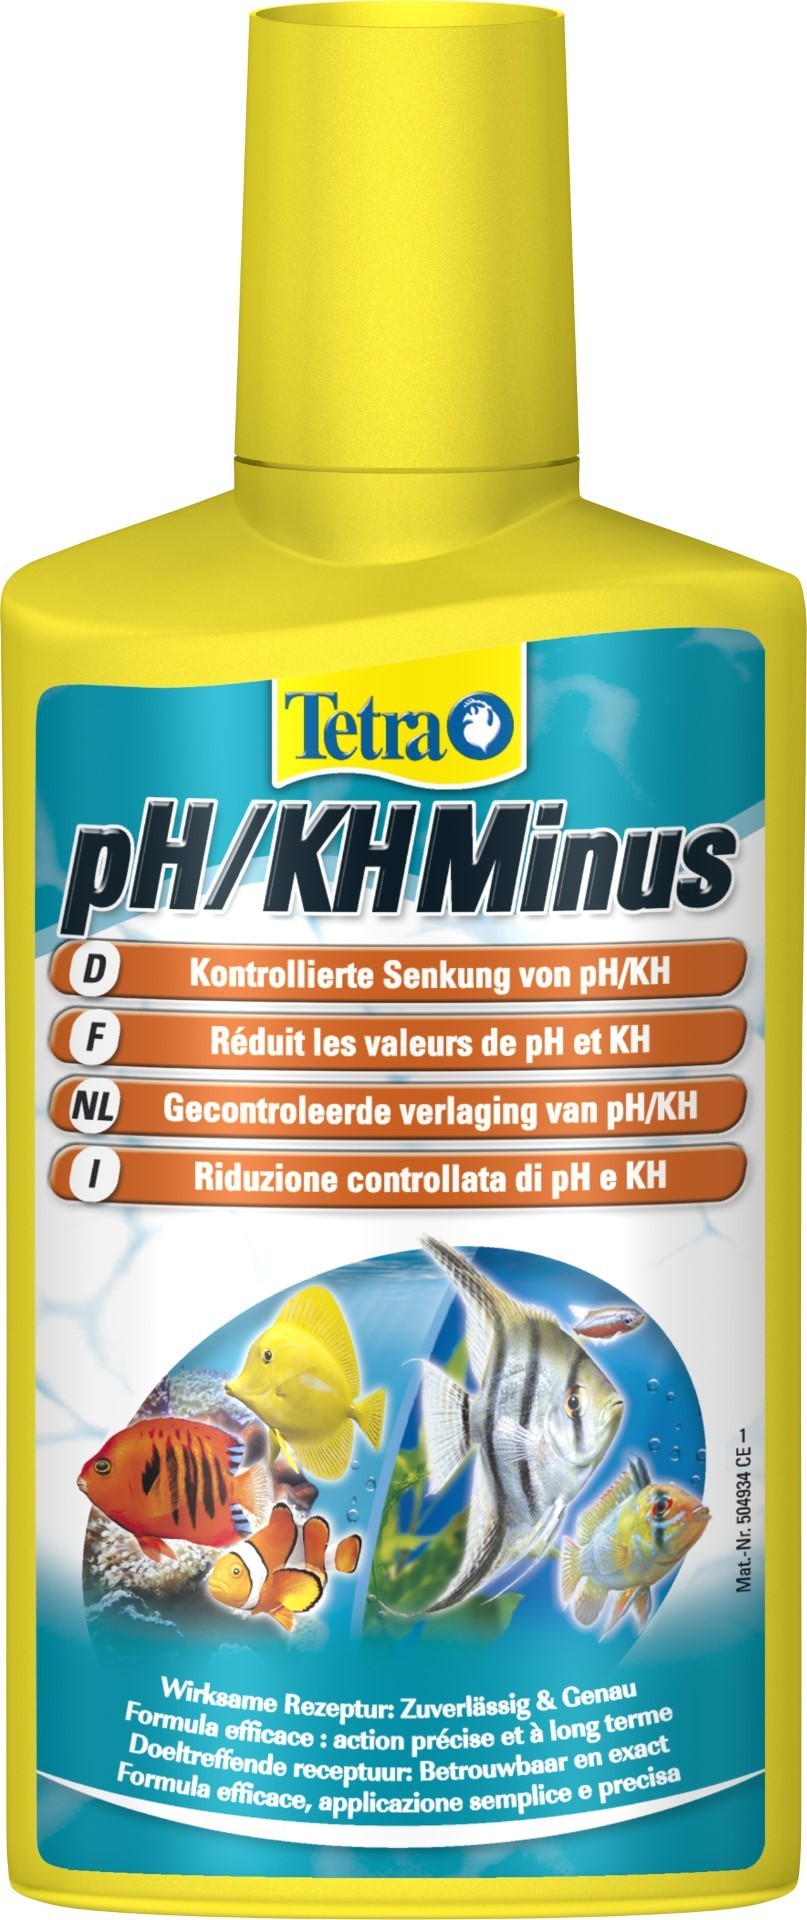 Tetra Aqua PH/KH minus 250 ml